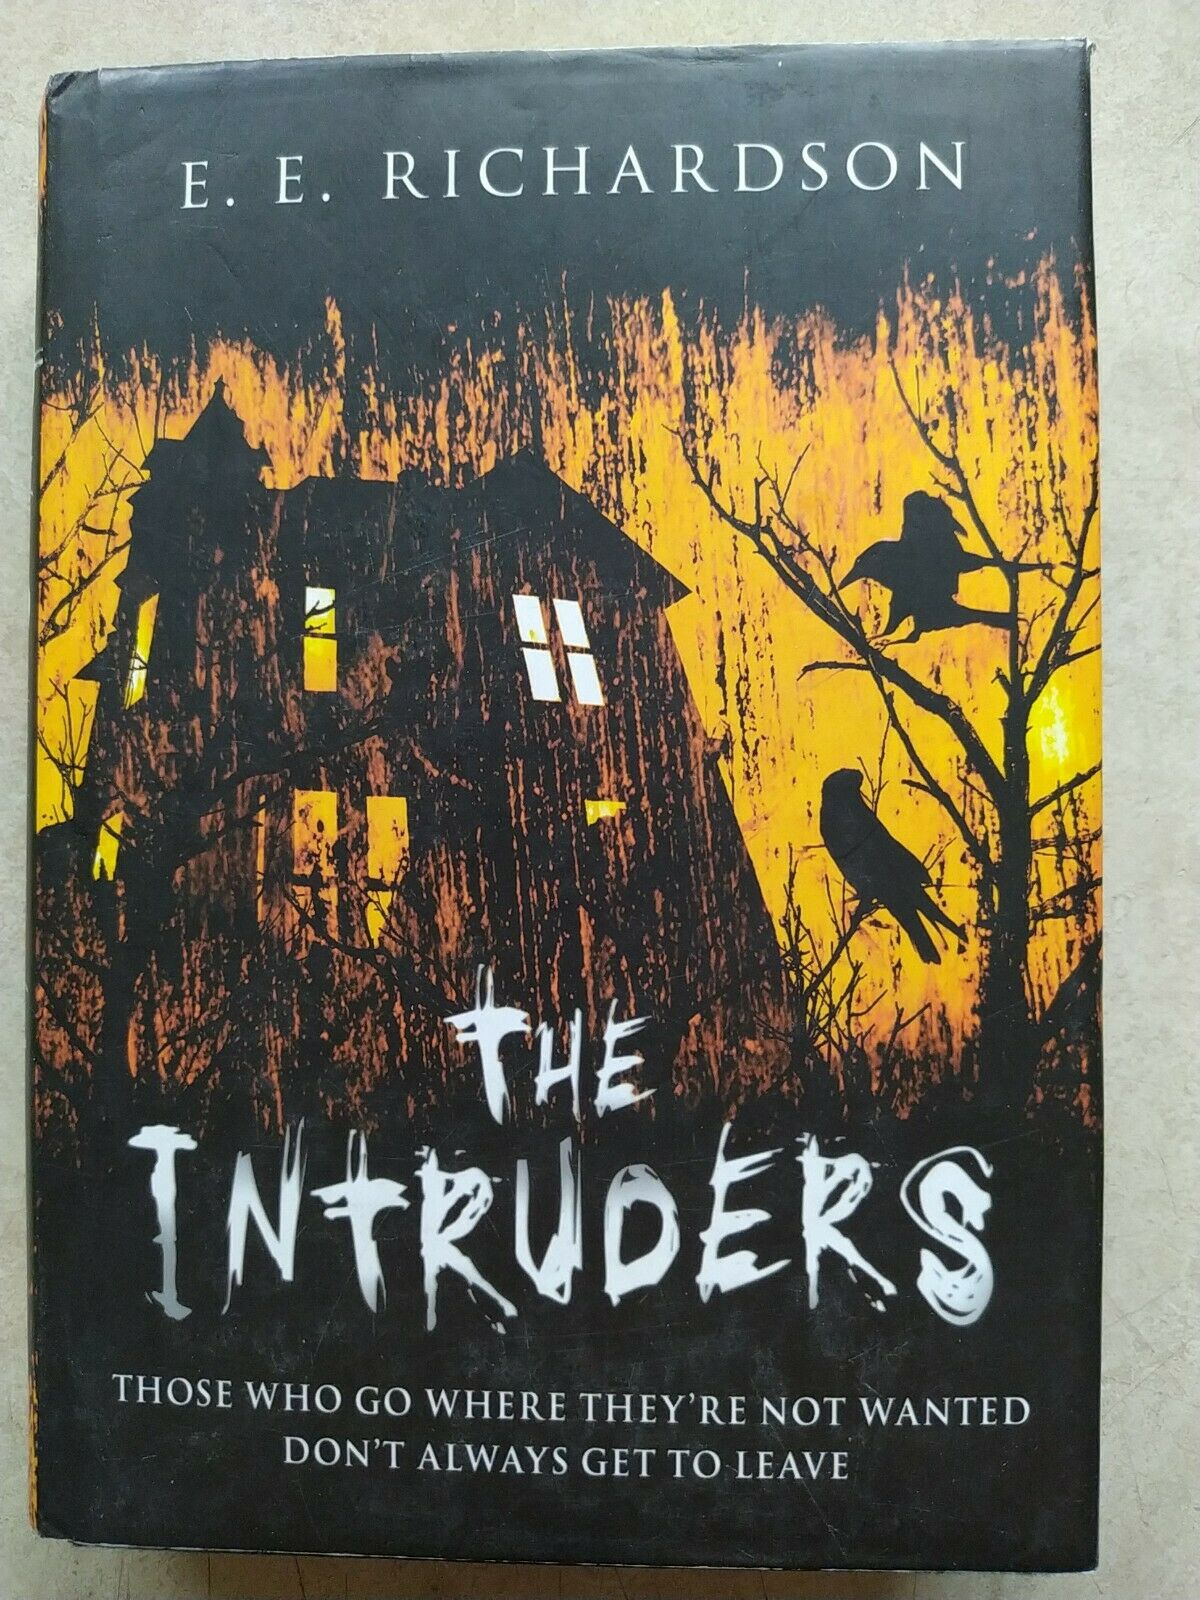 The Intruders by E.E. Richardson